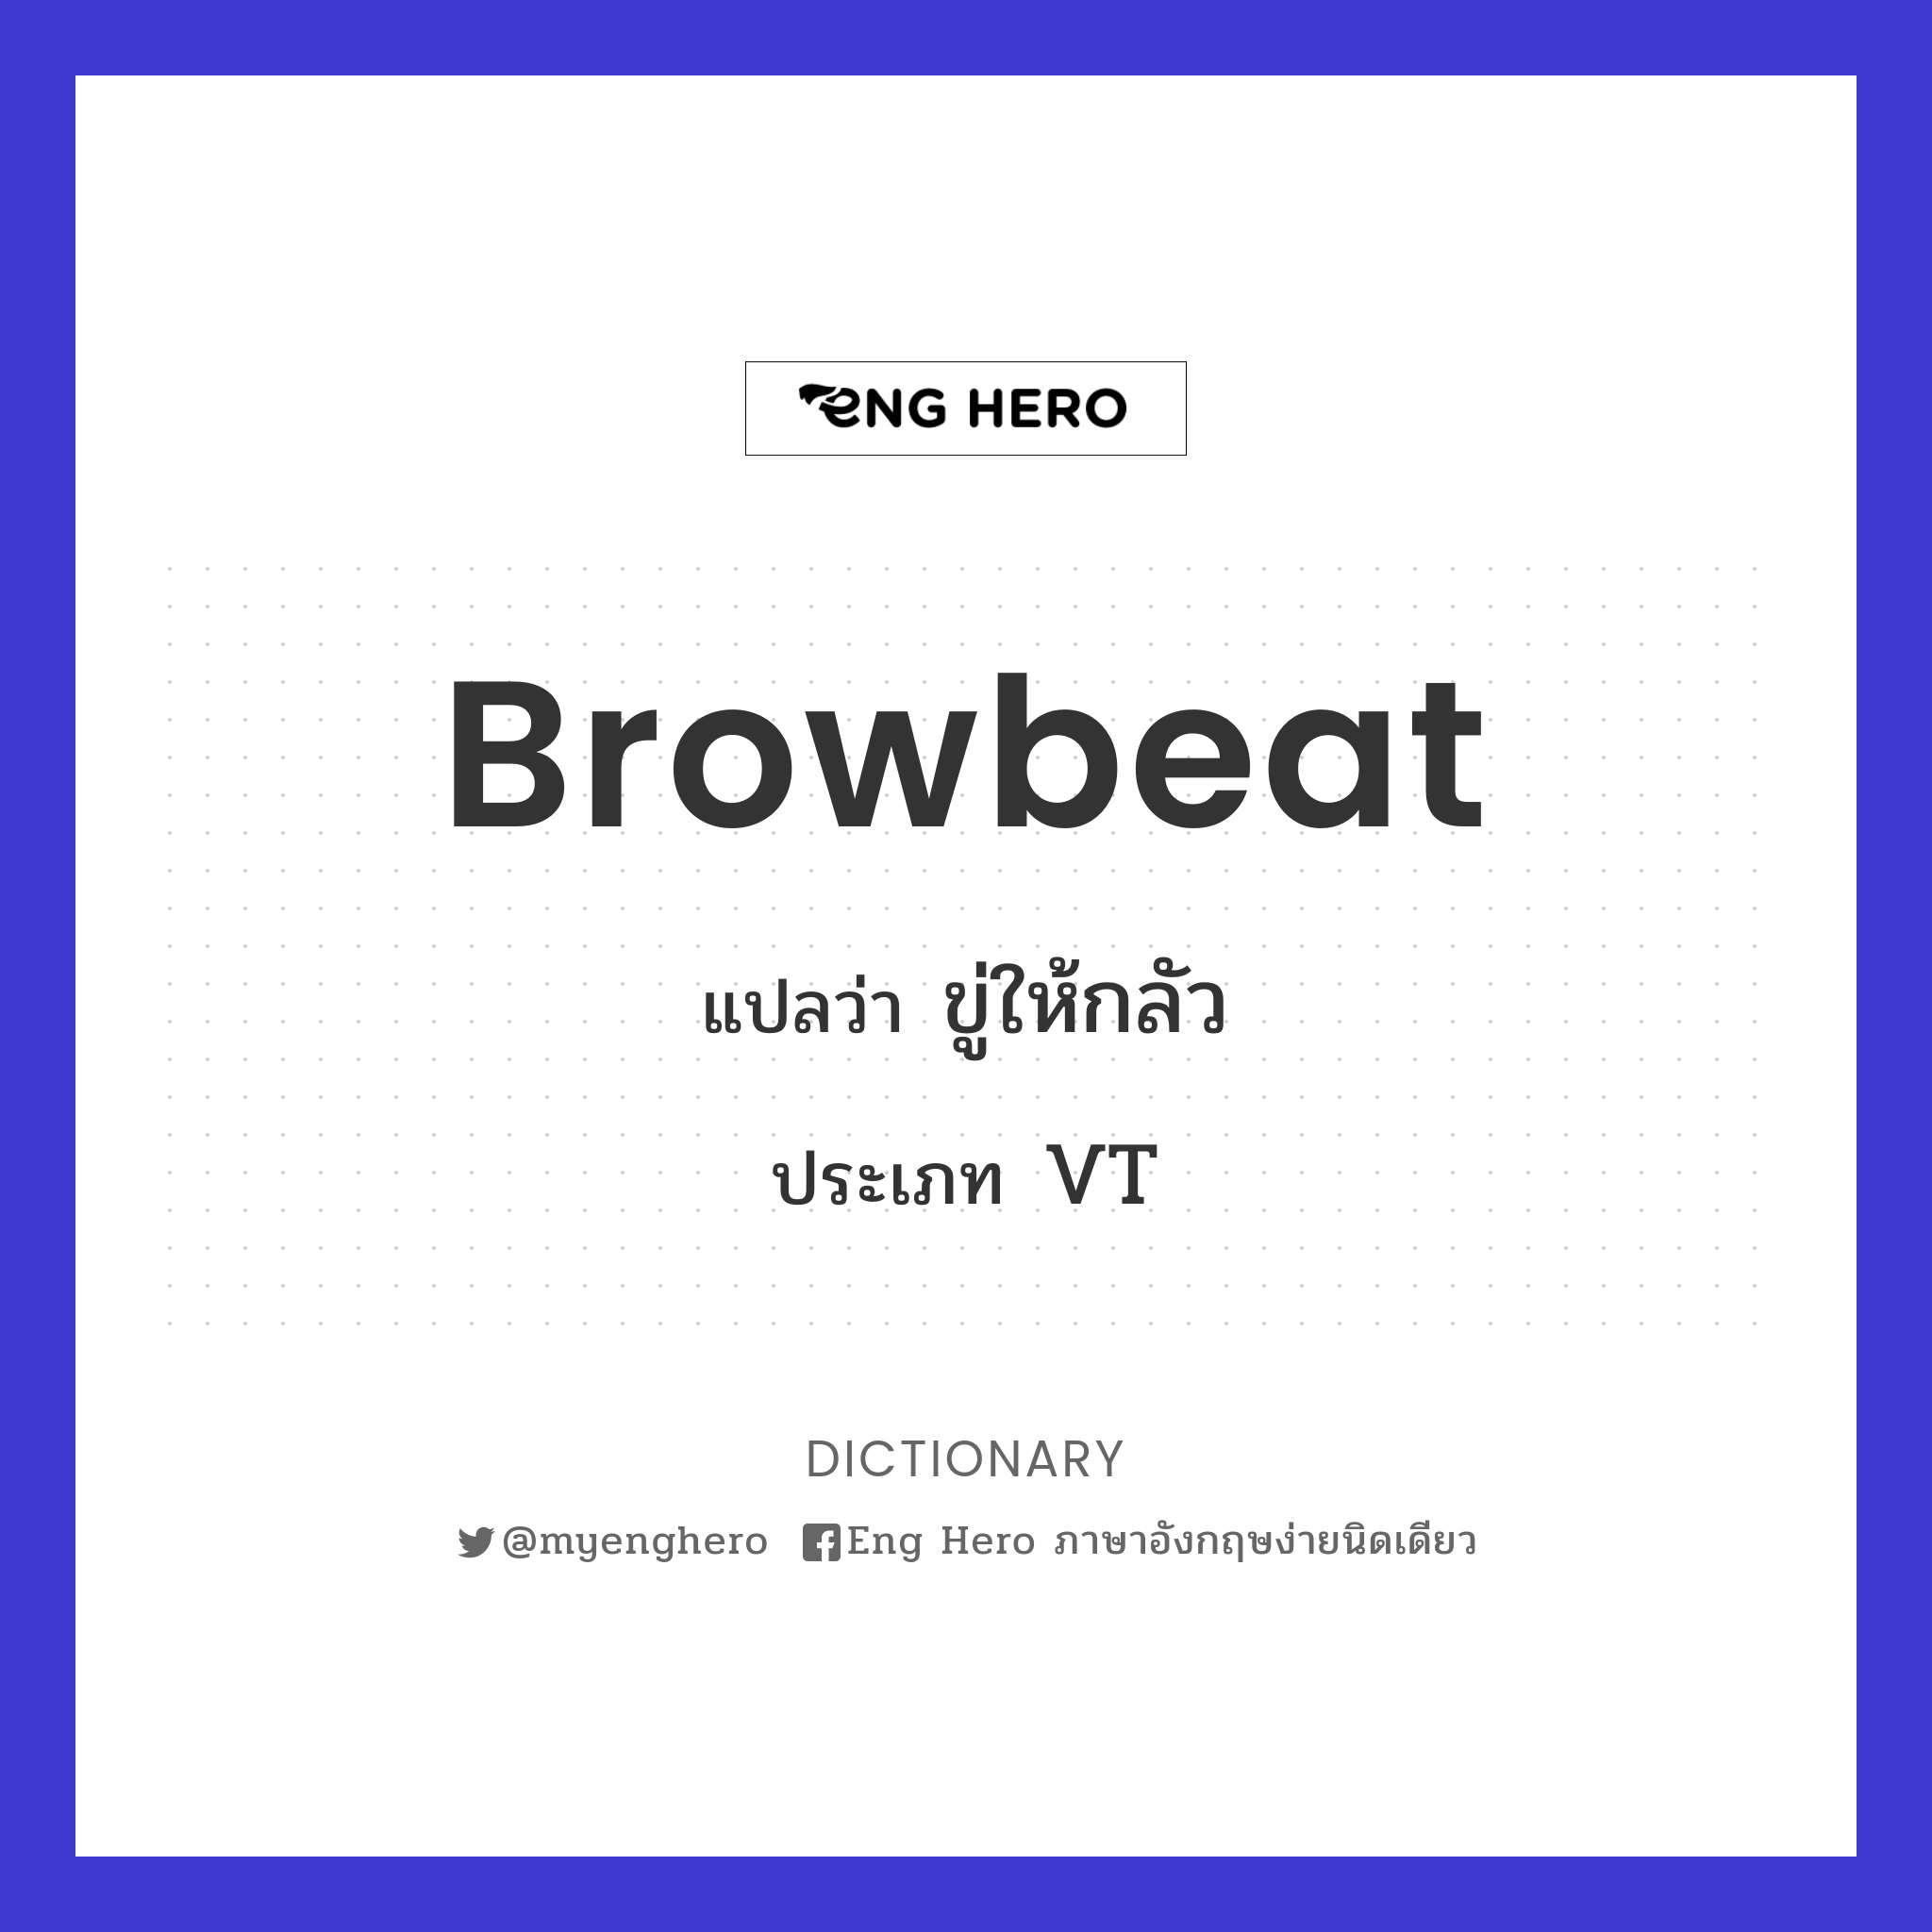 browbeat